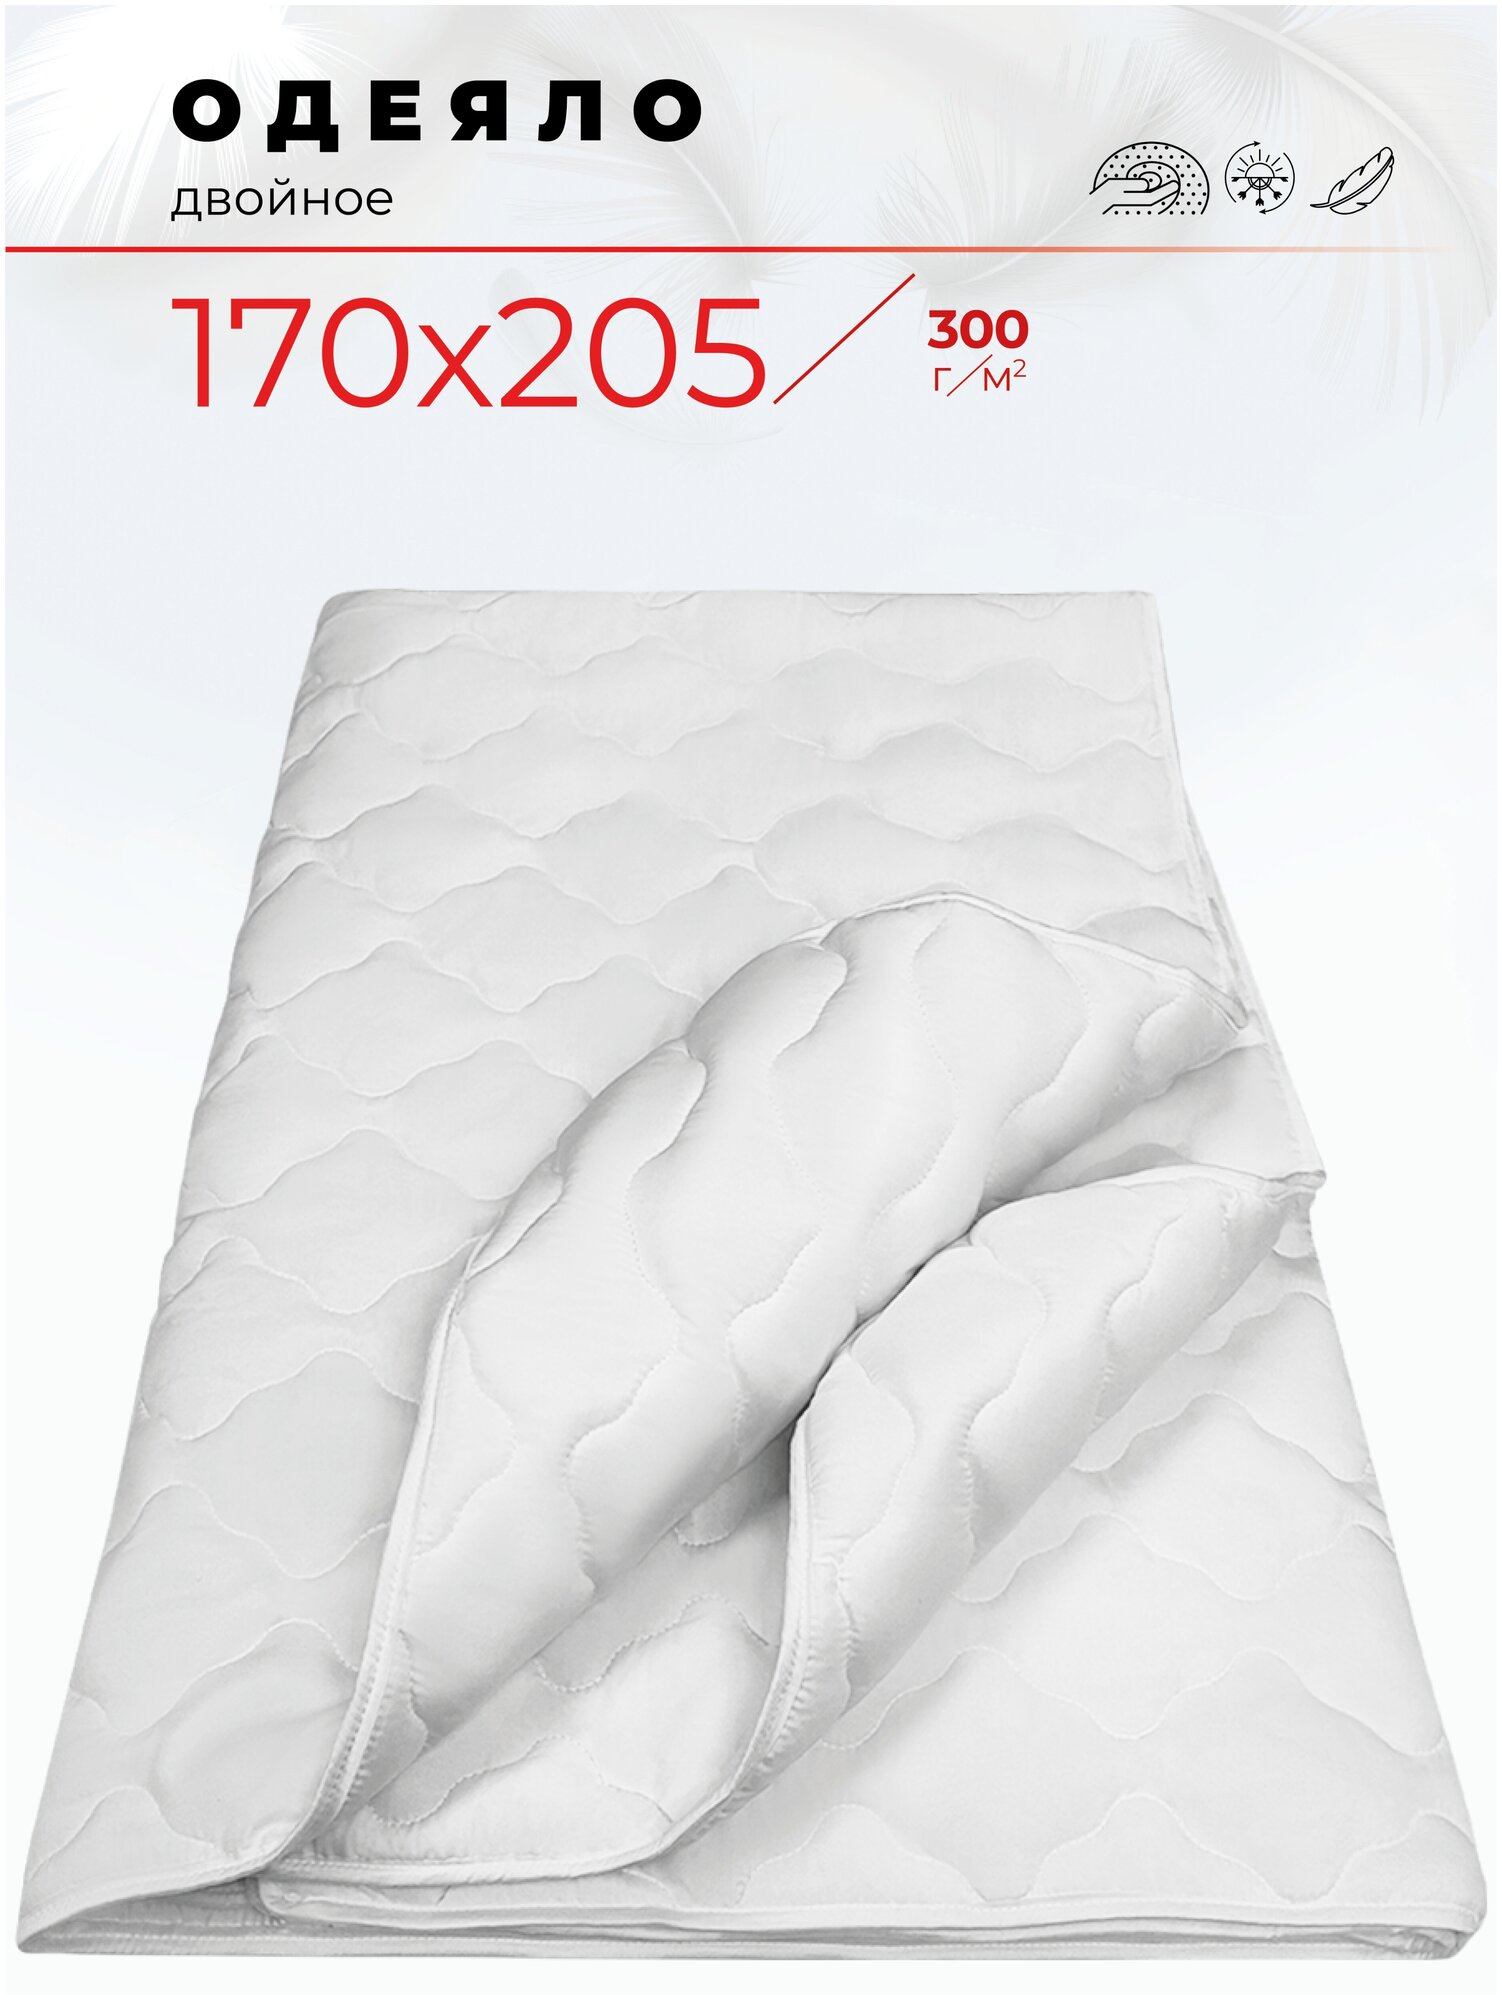 Одеяло лебяжий пух бязь 170 на 205, белое